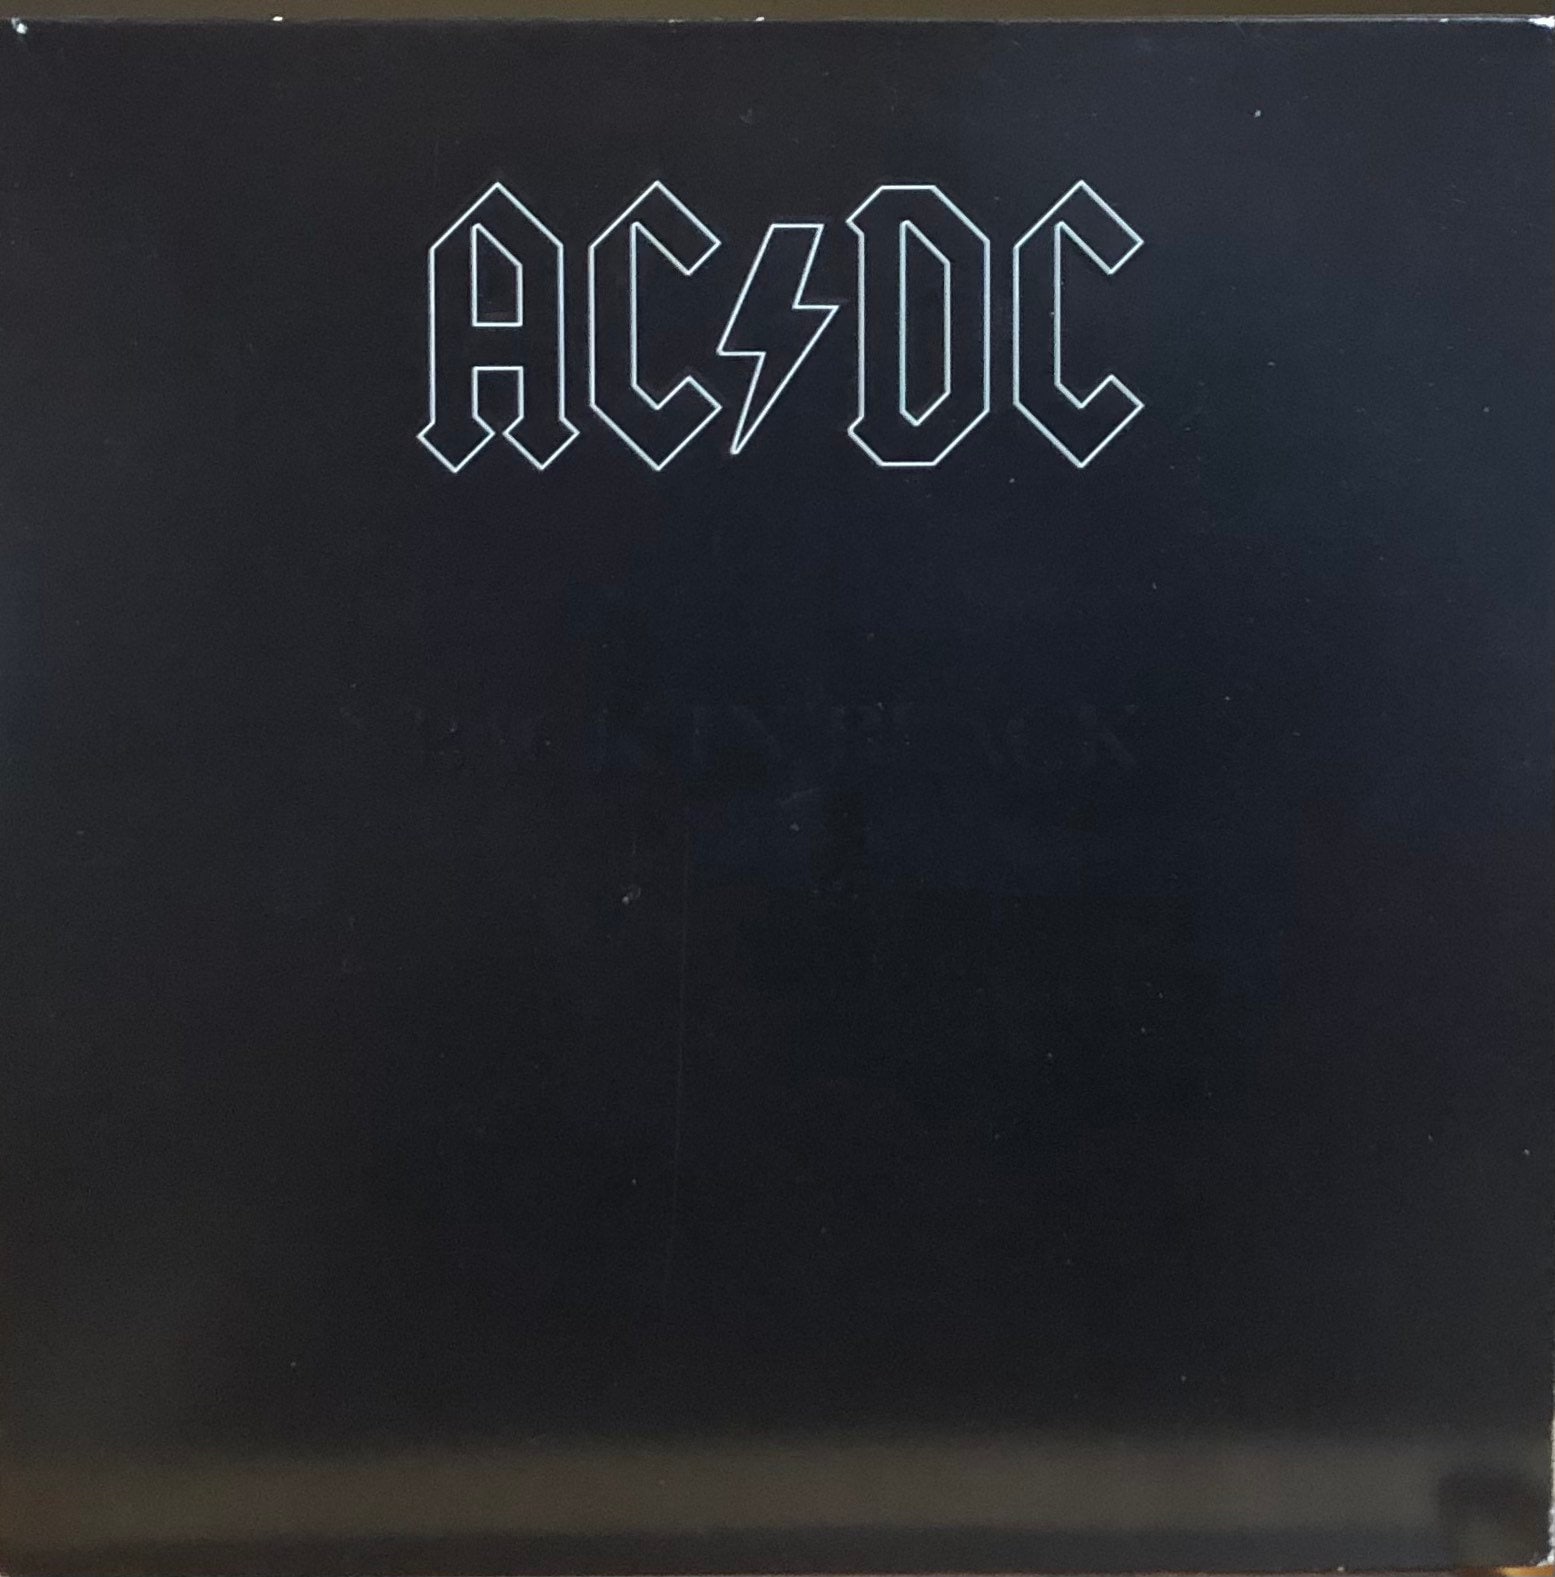 AC/DC - Back in Black (Full Album) 